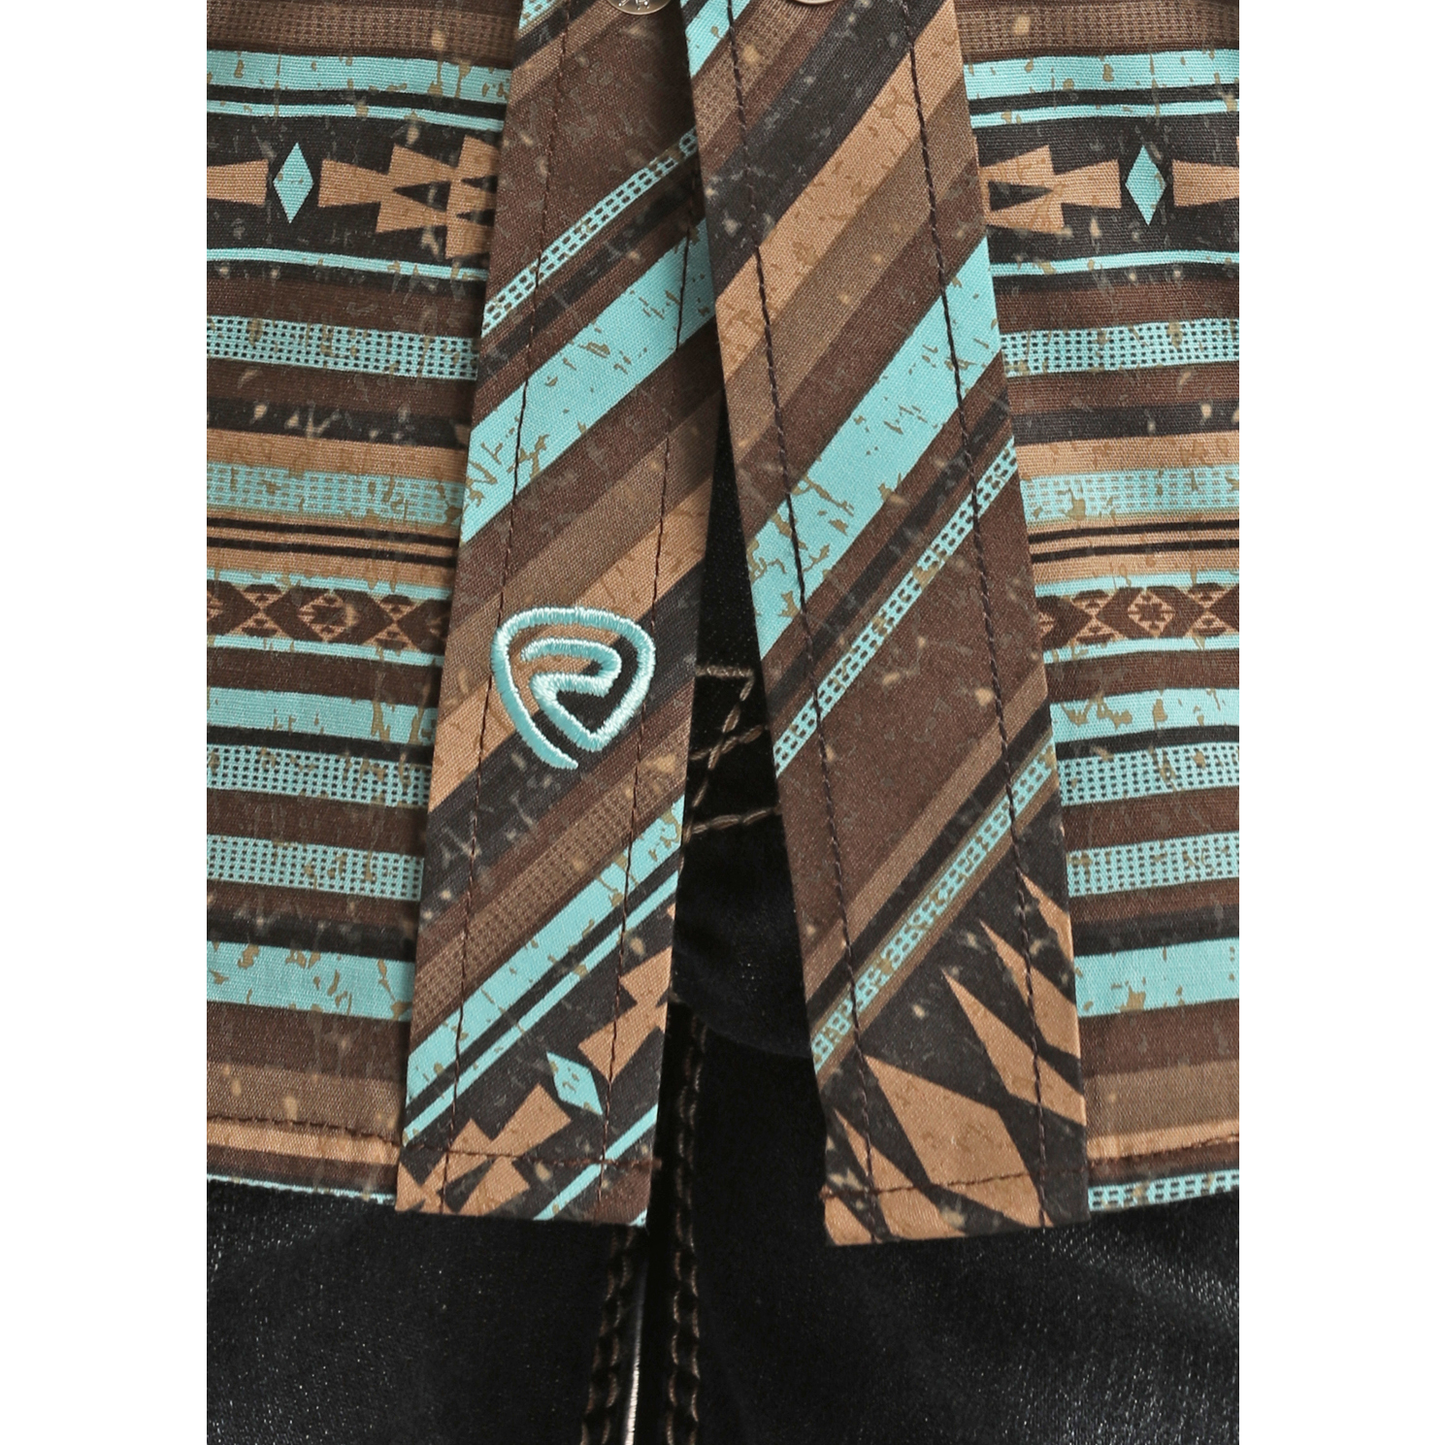 Rock & Roll Cowboy Kid's Teal Aztec Stripe Snap Shirt RRBSOSRZ17-81